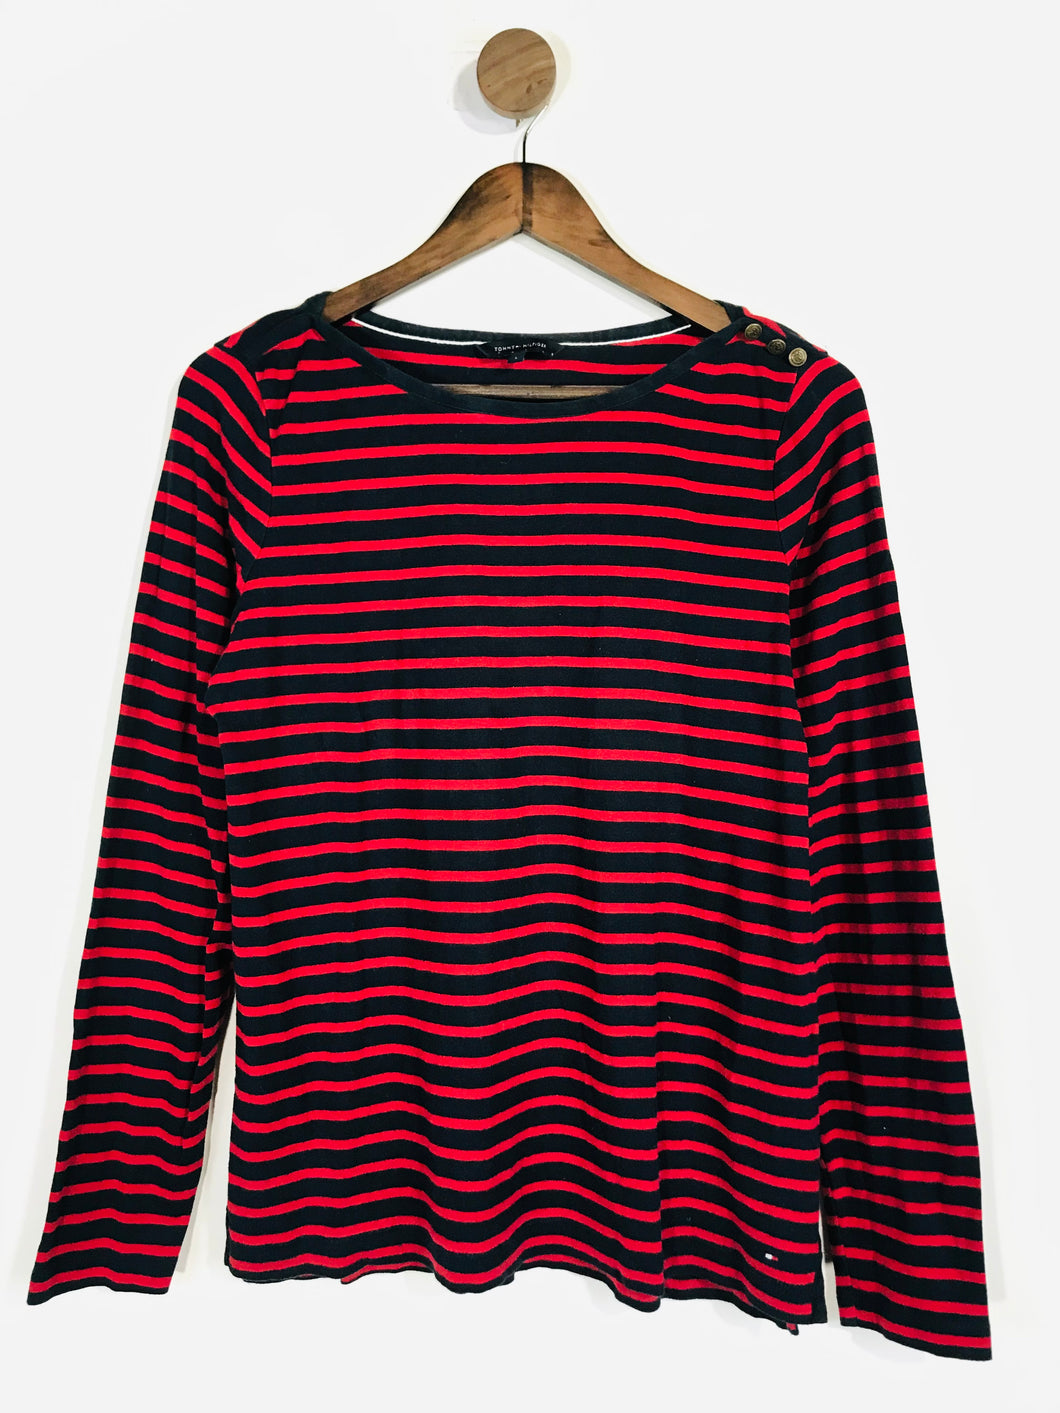 Tommy Hilfiger Women's Striped Long Sleeve T-Shirt | L UK14 | Multicoloured